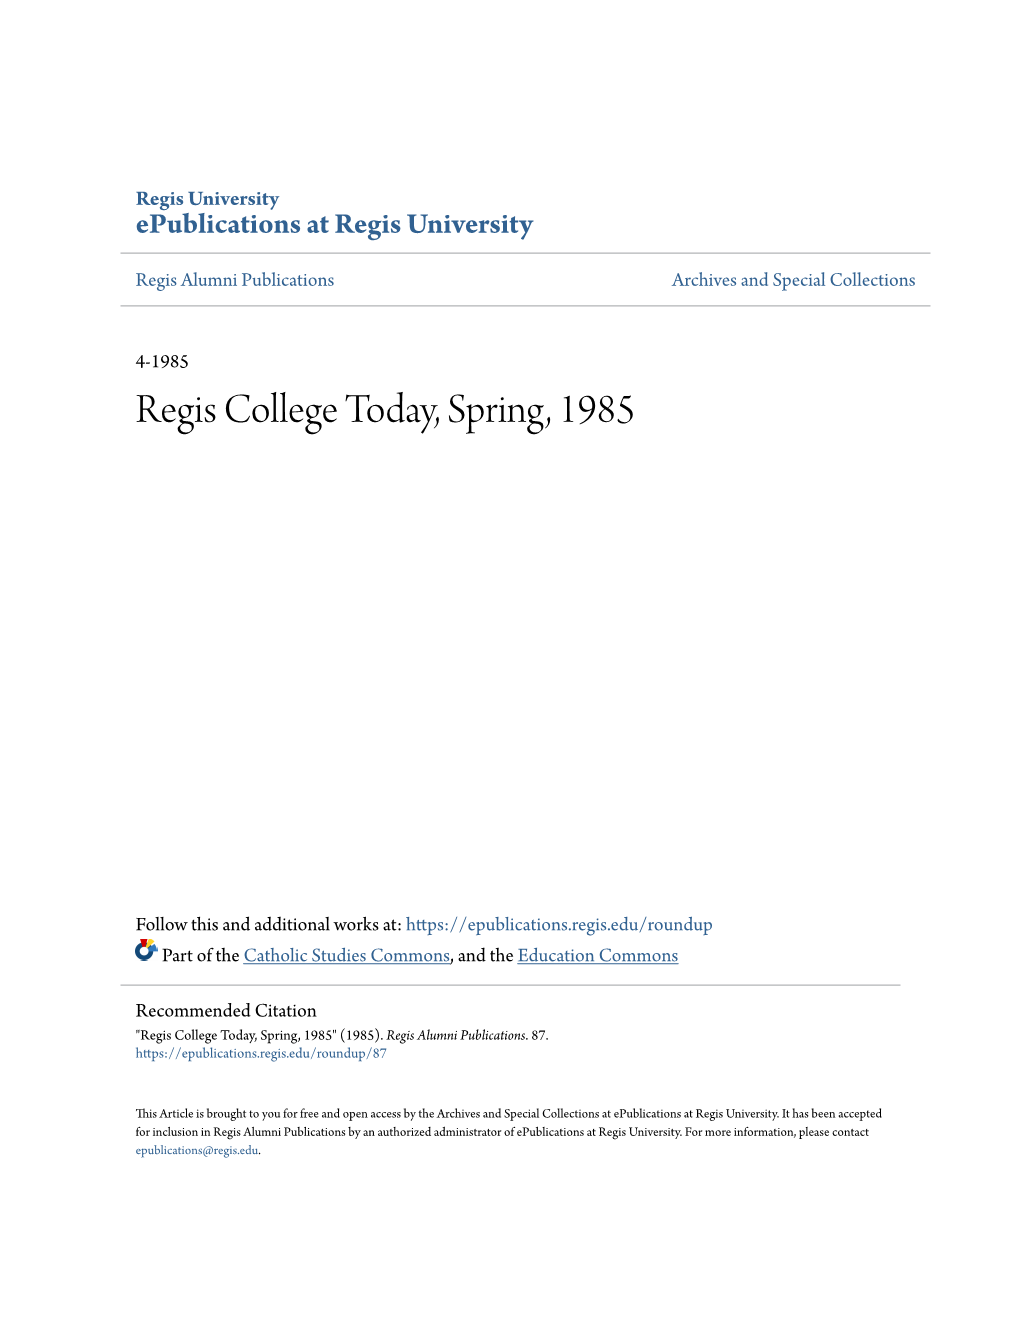 Regis College Today, Spring, 1985